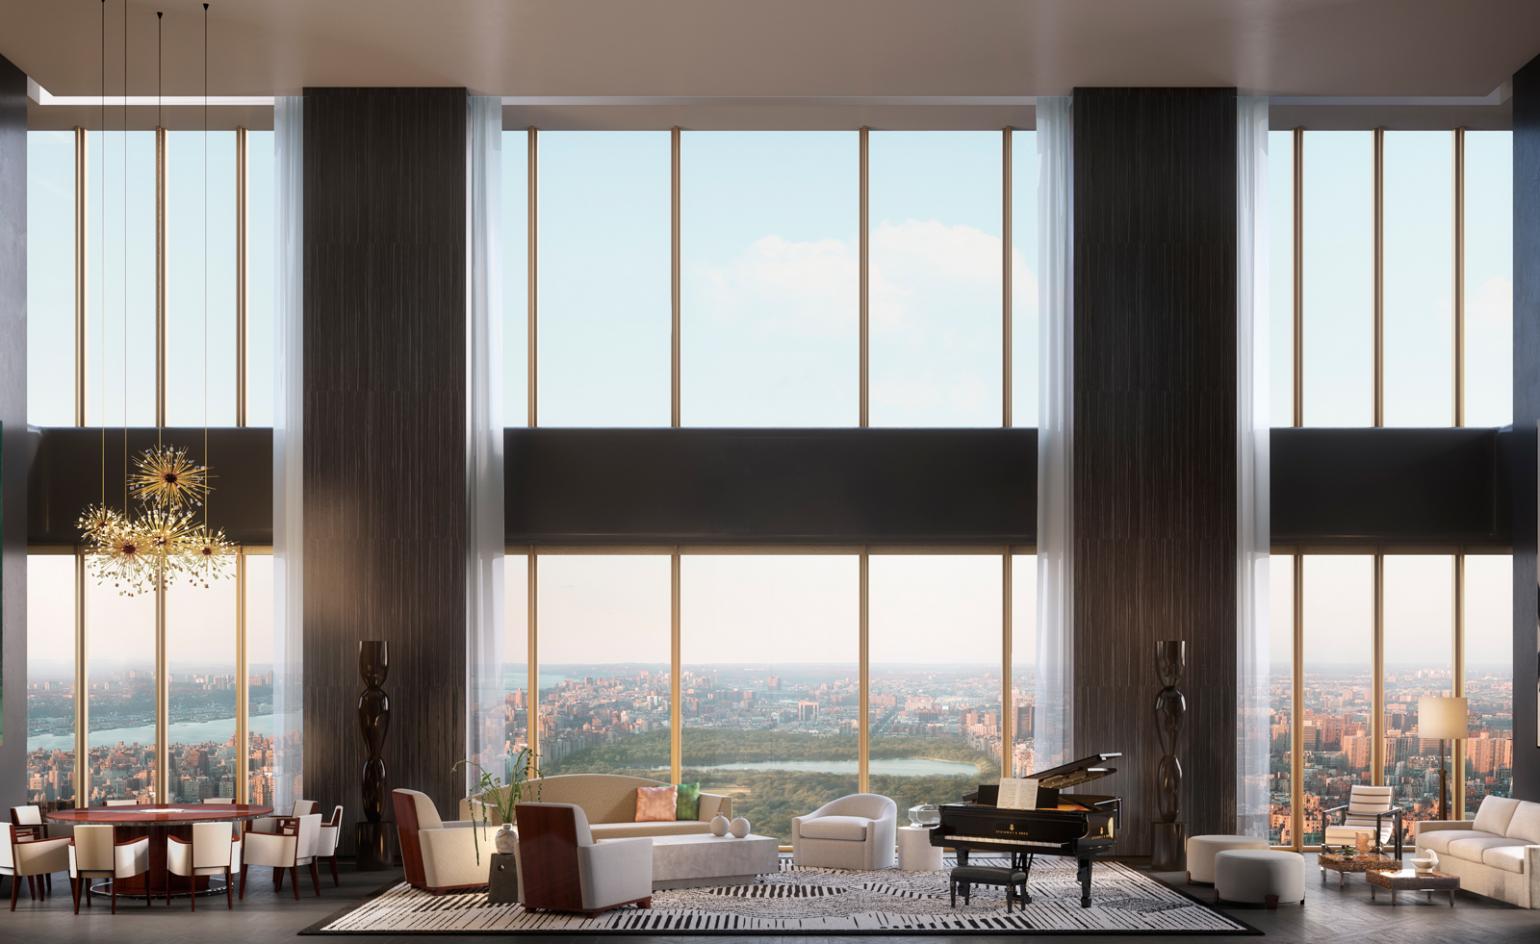 New York City’s latest crop of luxury residential developments-5